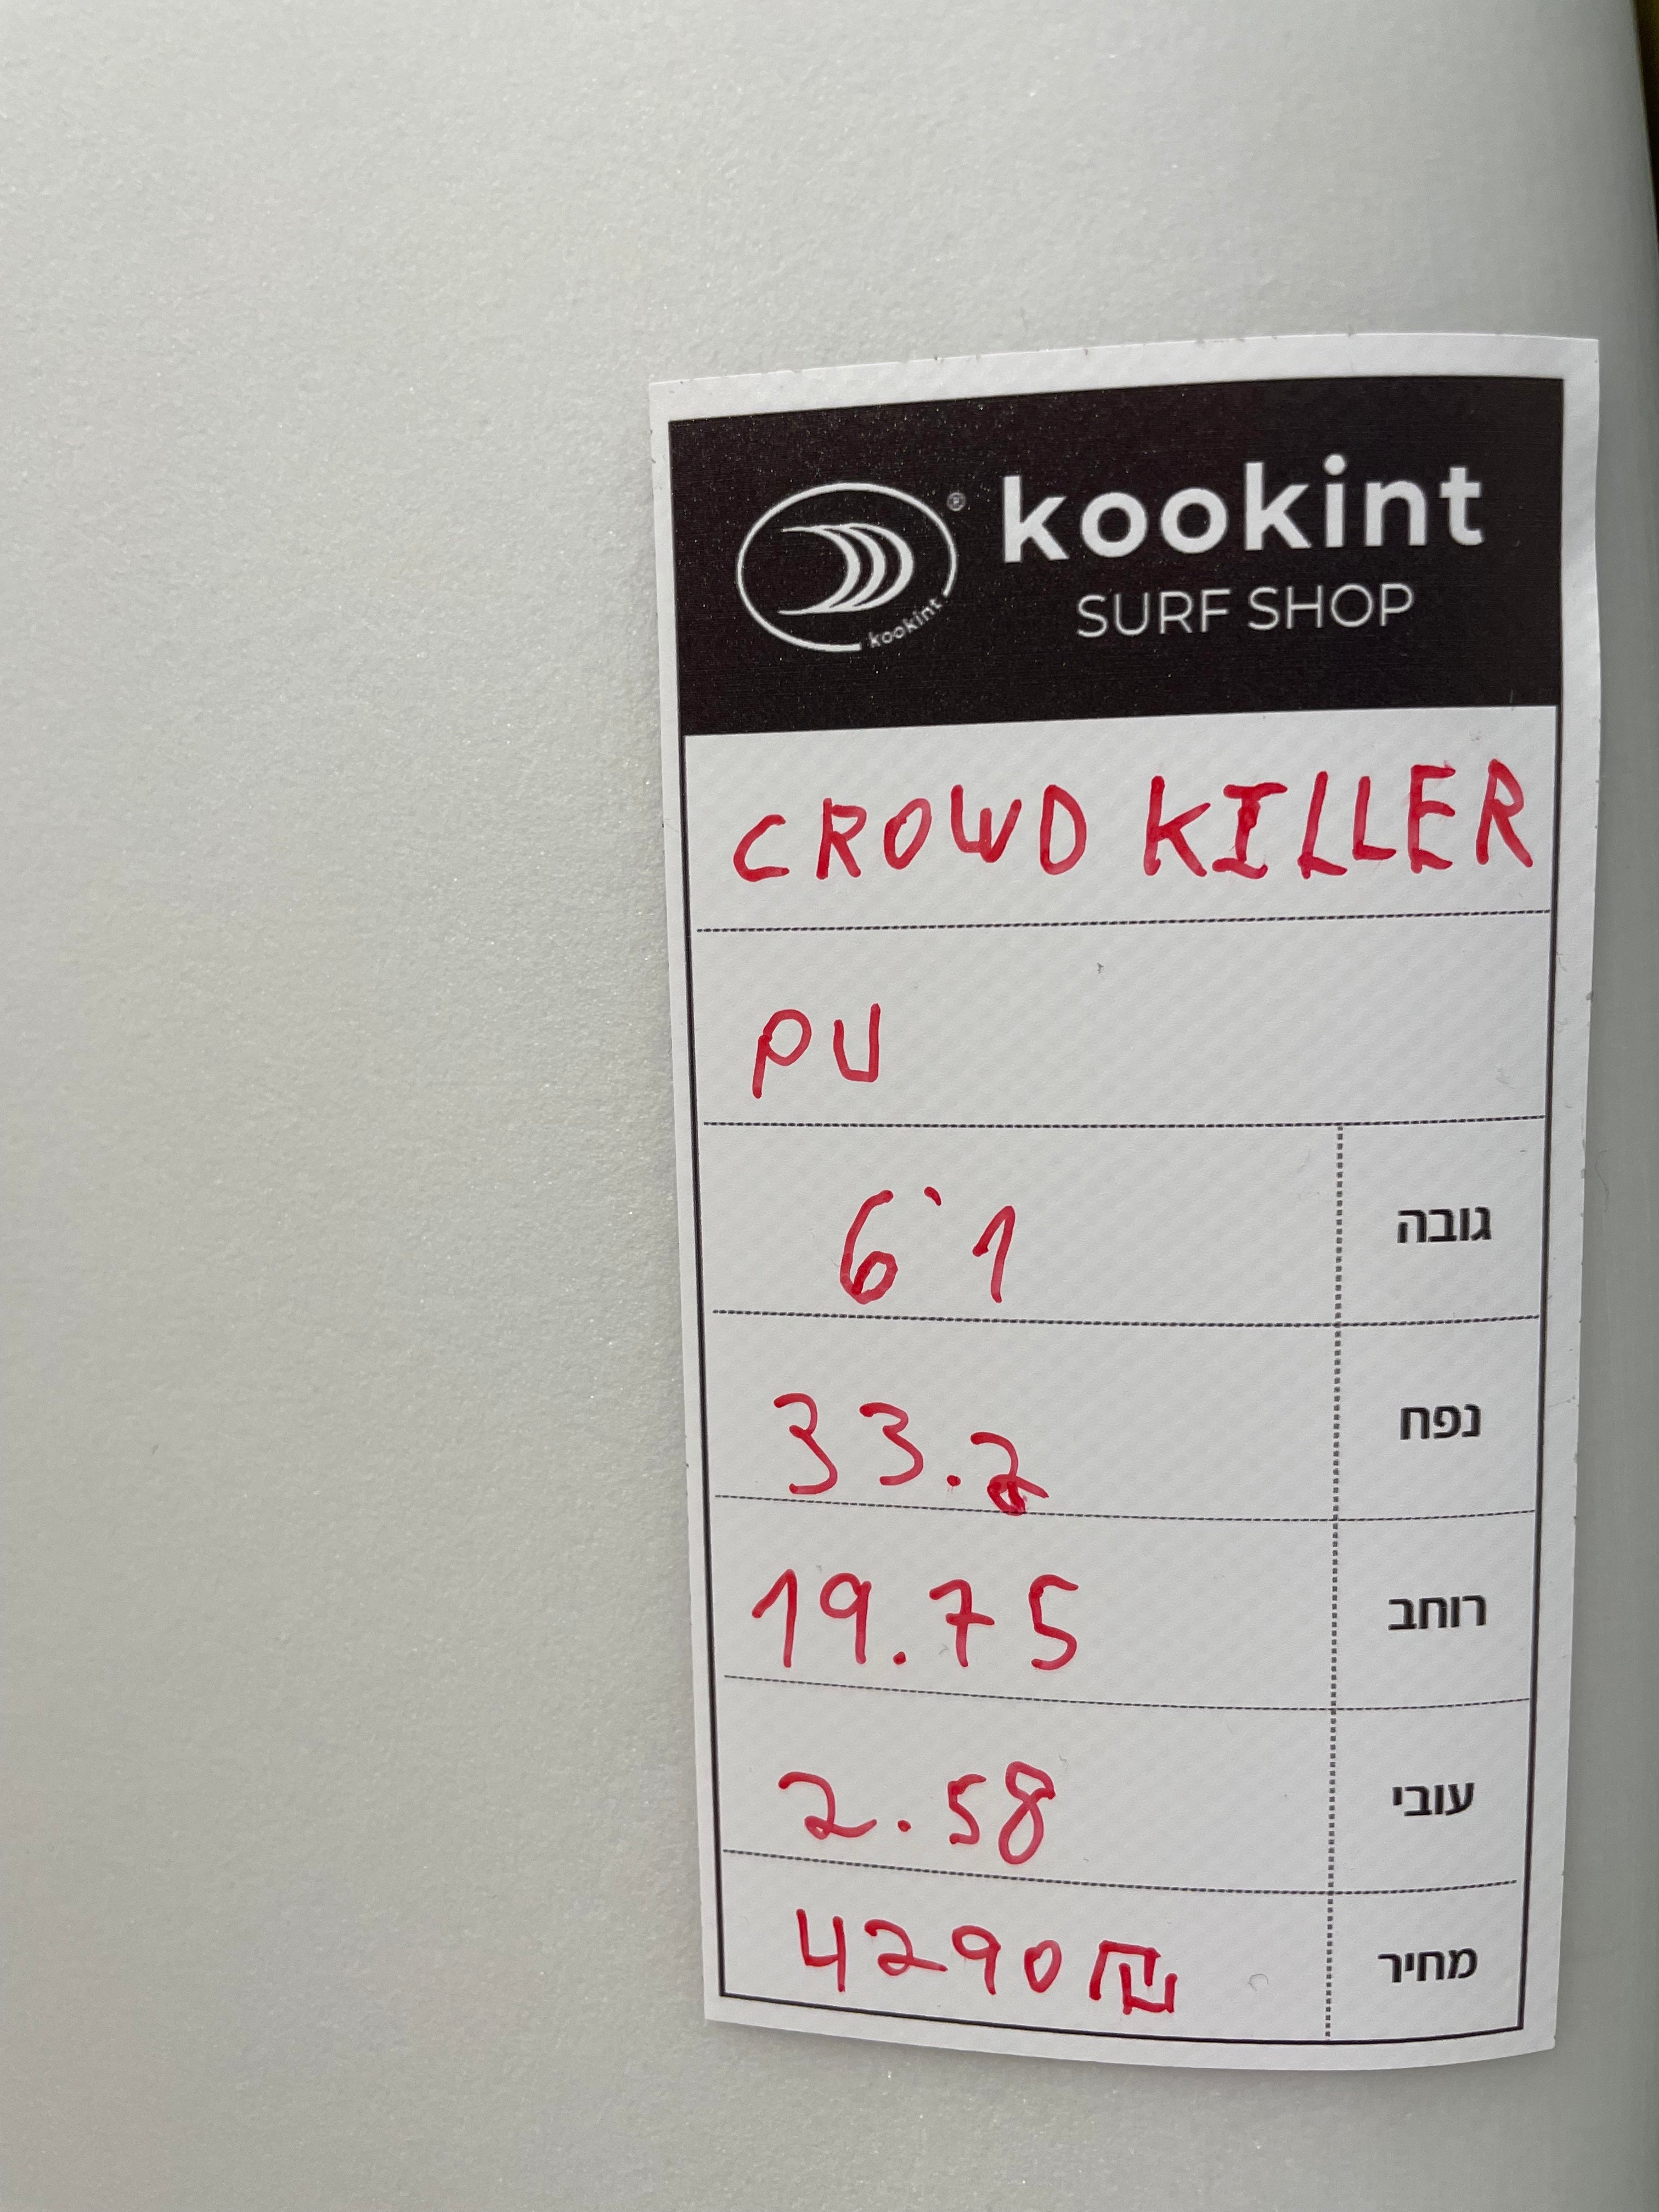 Crowd Killer 6.1